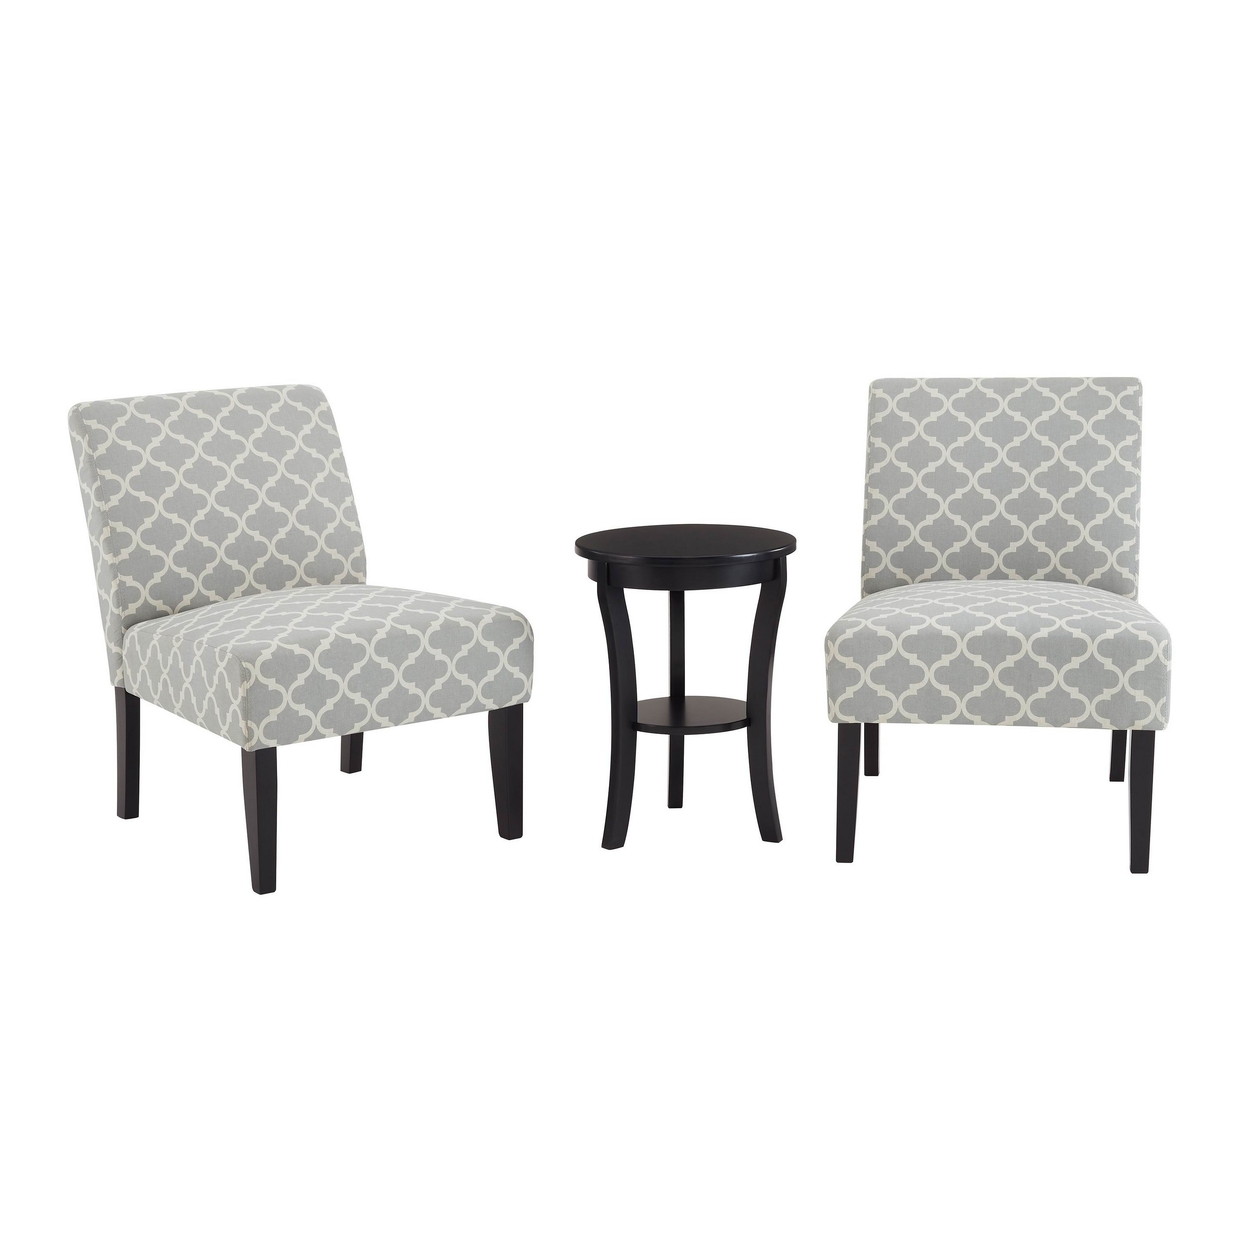 Remi 3 Piece Seating Set, 2 Chairs, Trellis Print, Gray Fabric Upholstery- Saltoro Sherpi